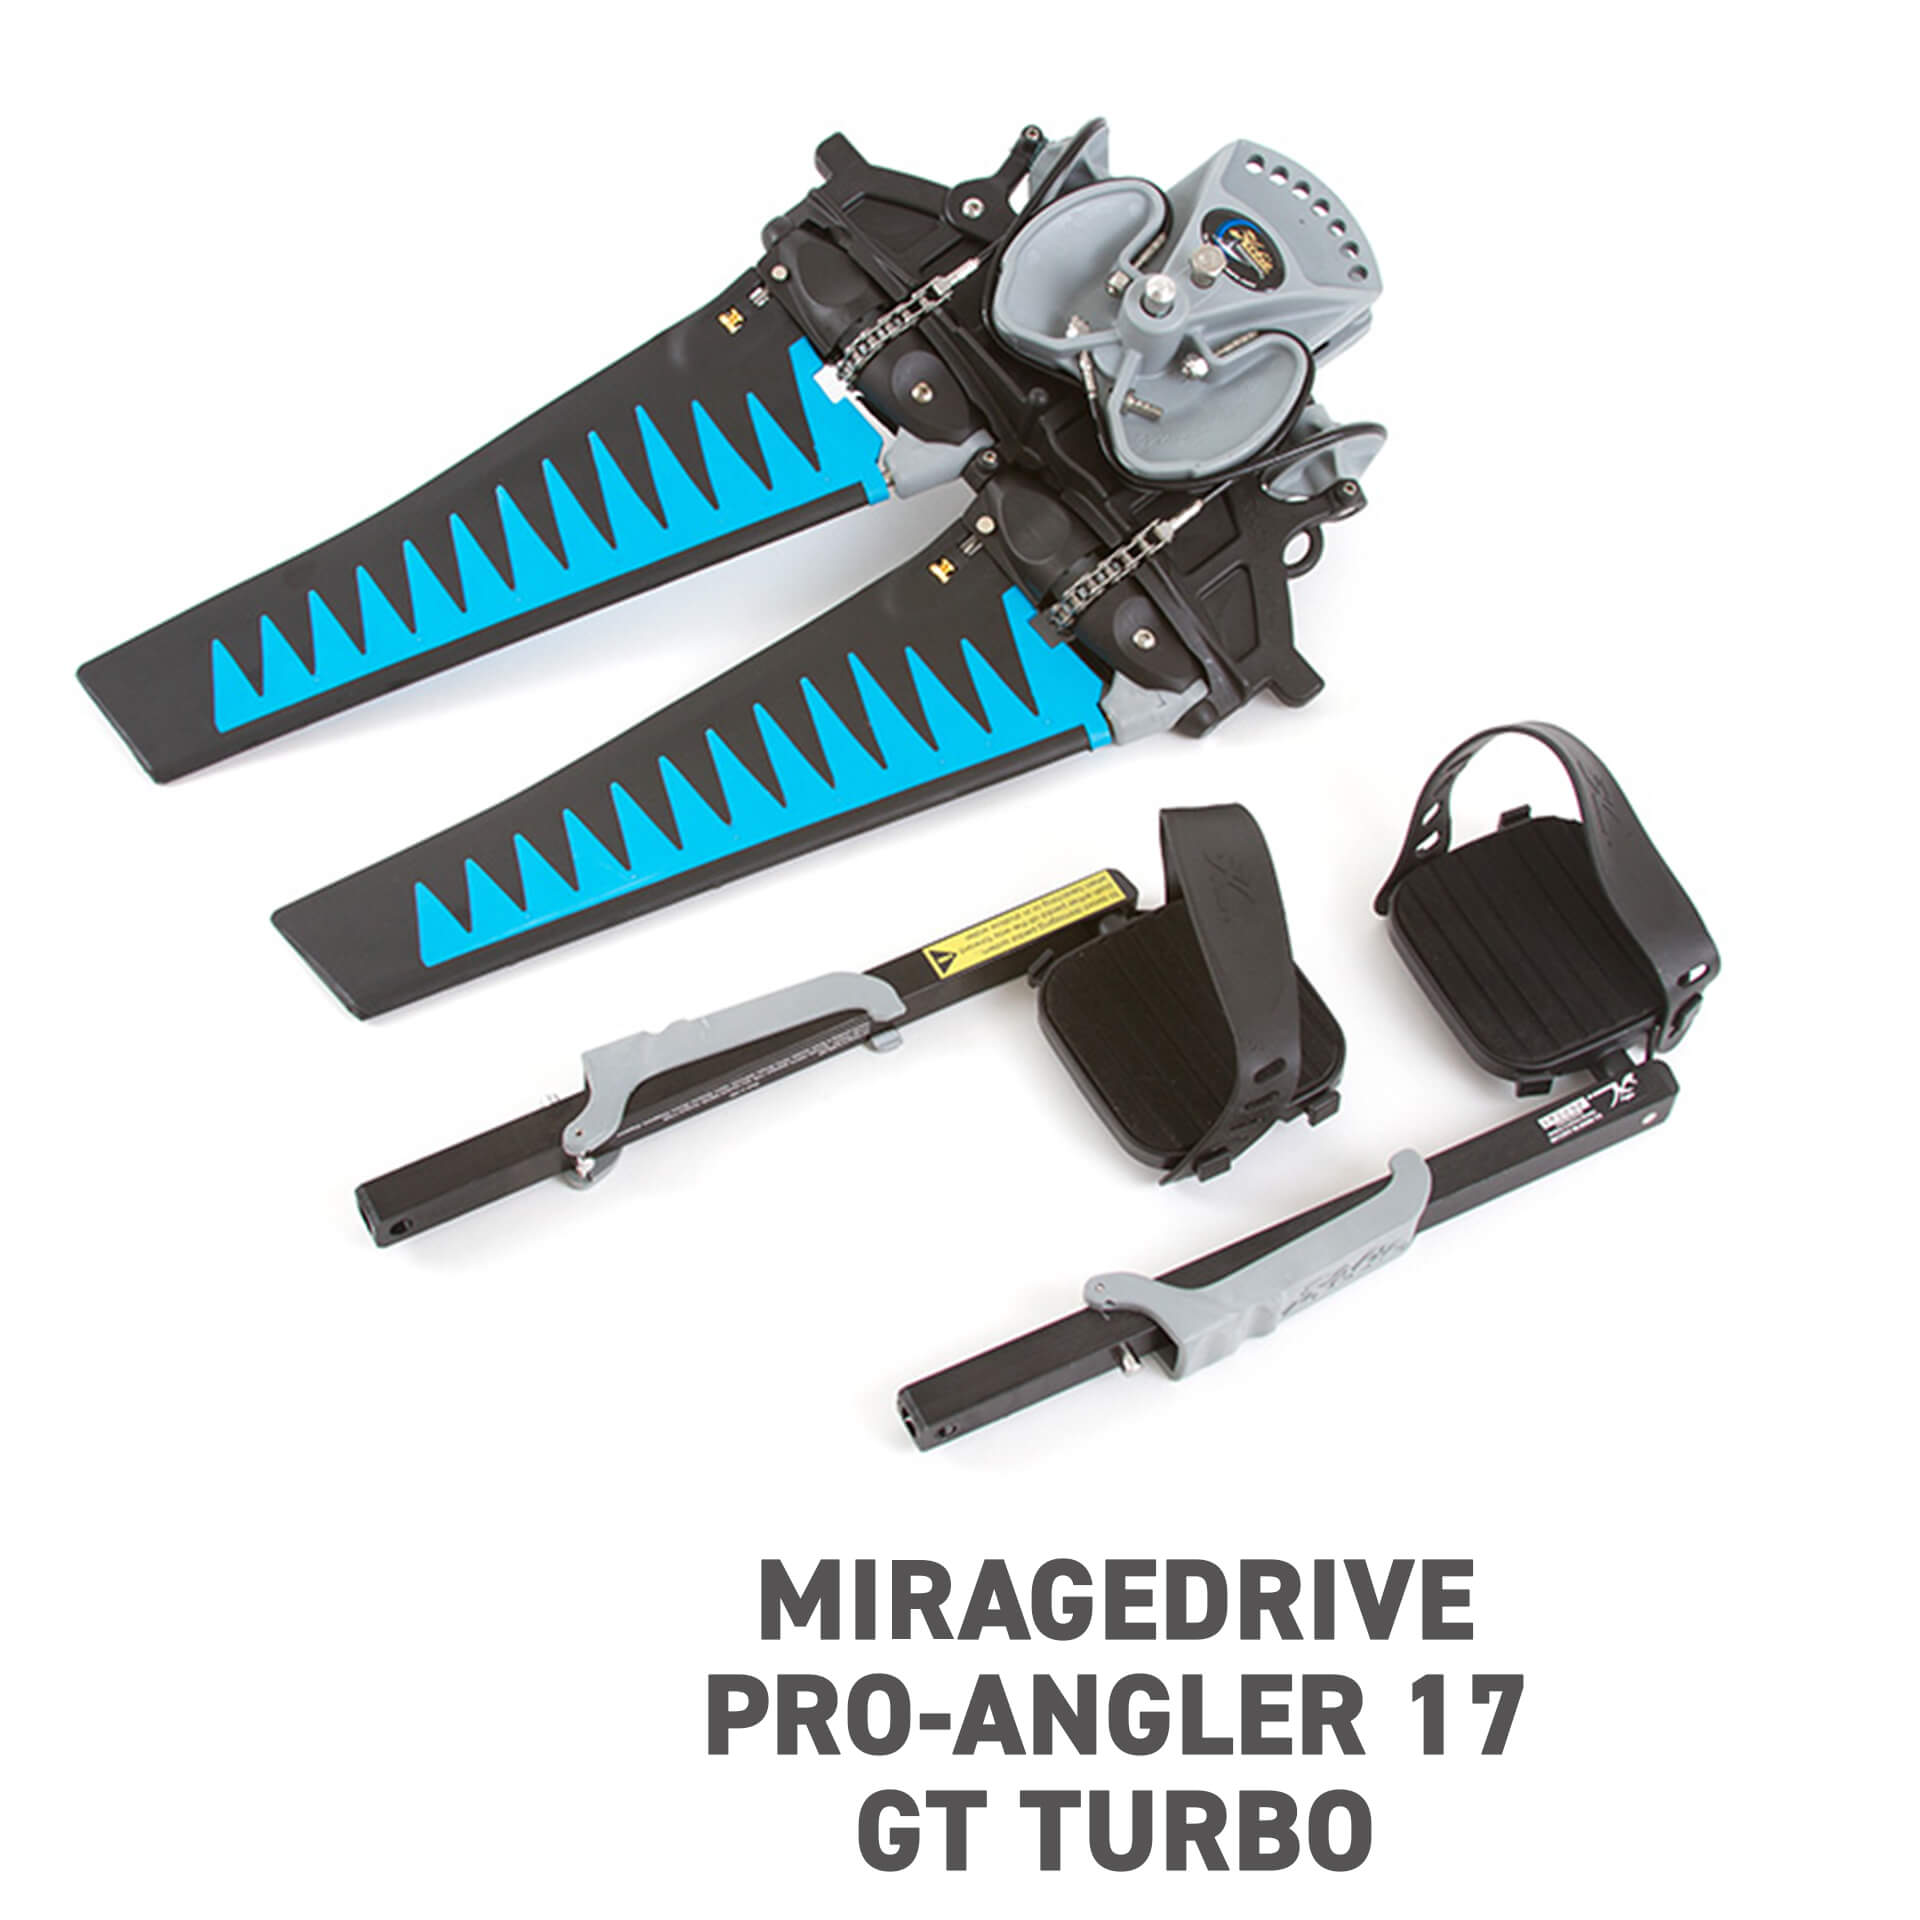 MirageDrive Pro Angler 17 GT with Turbo Bluefins sku: